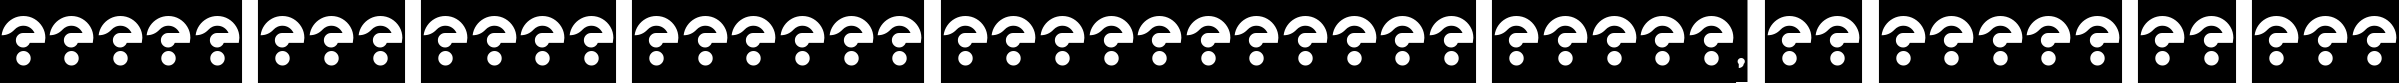 Пример написания шрифтом KIOSHIMA-Inverse текста на русском